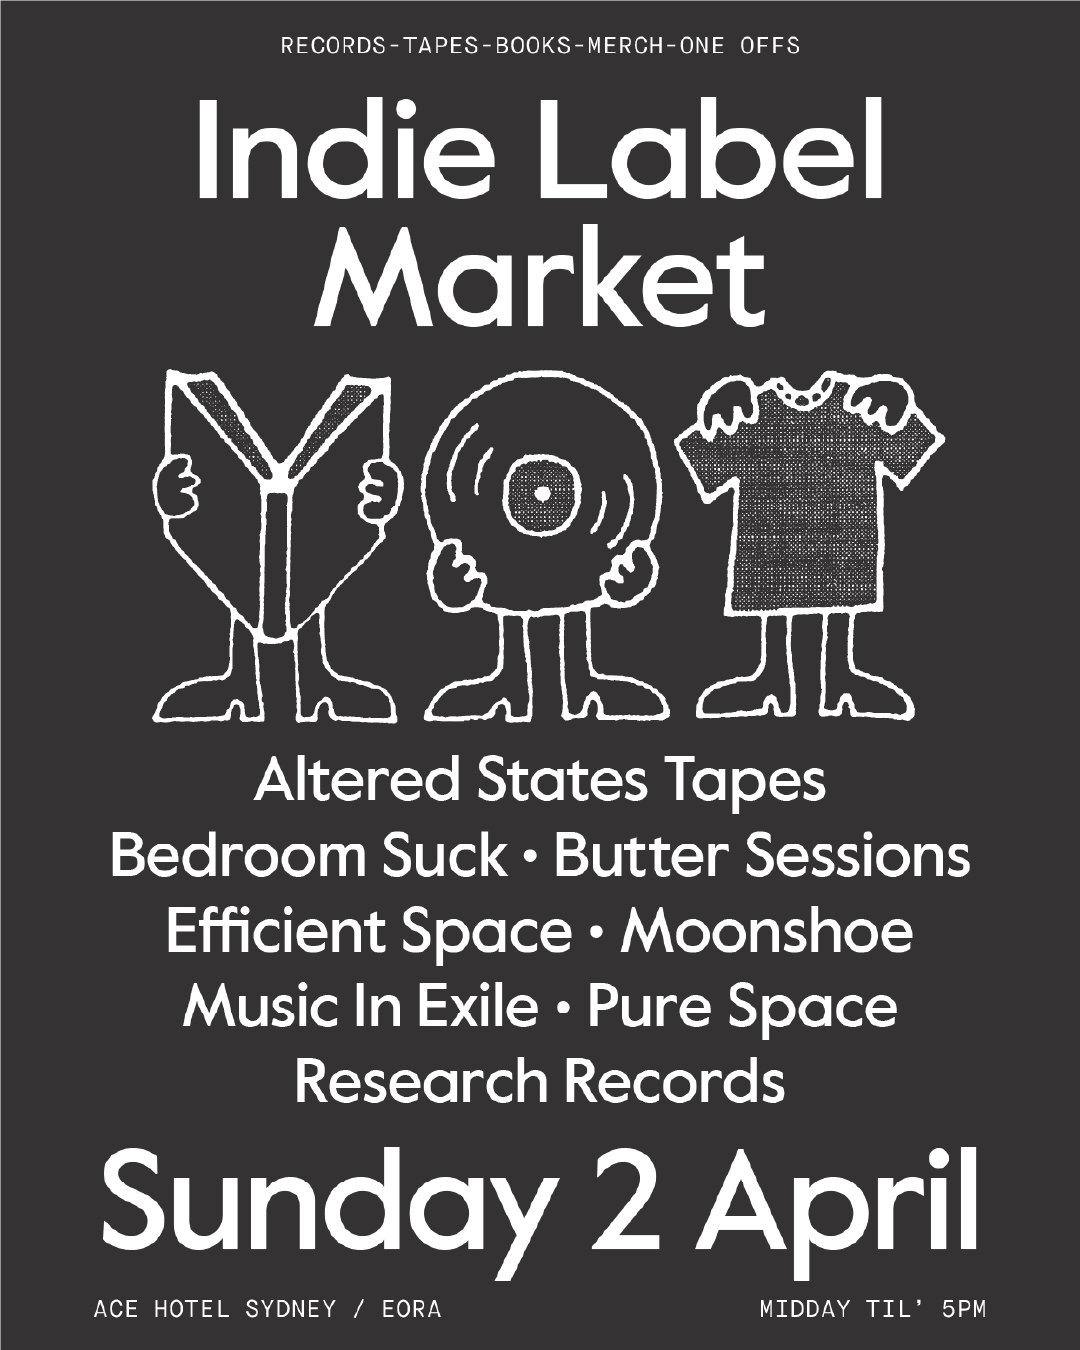 Indie Label Market promo